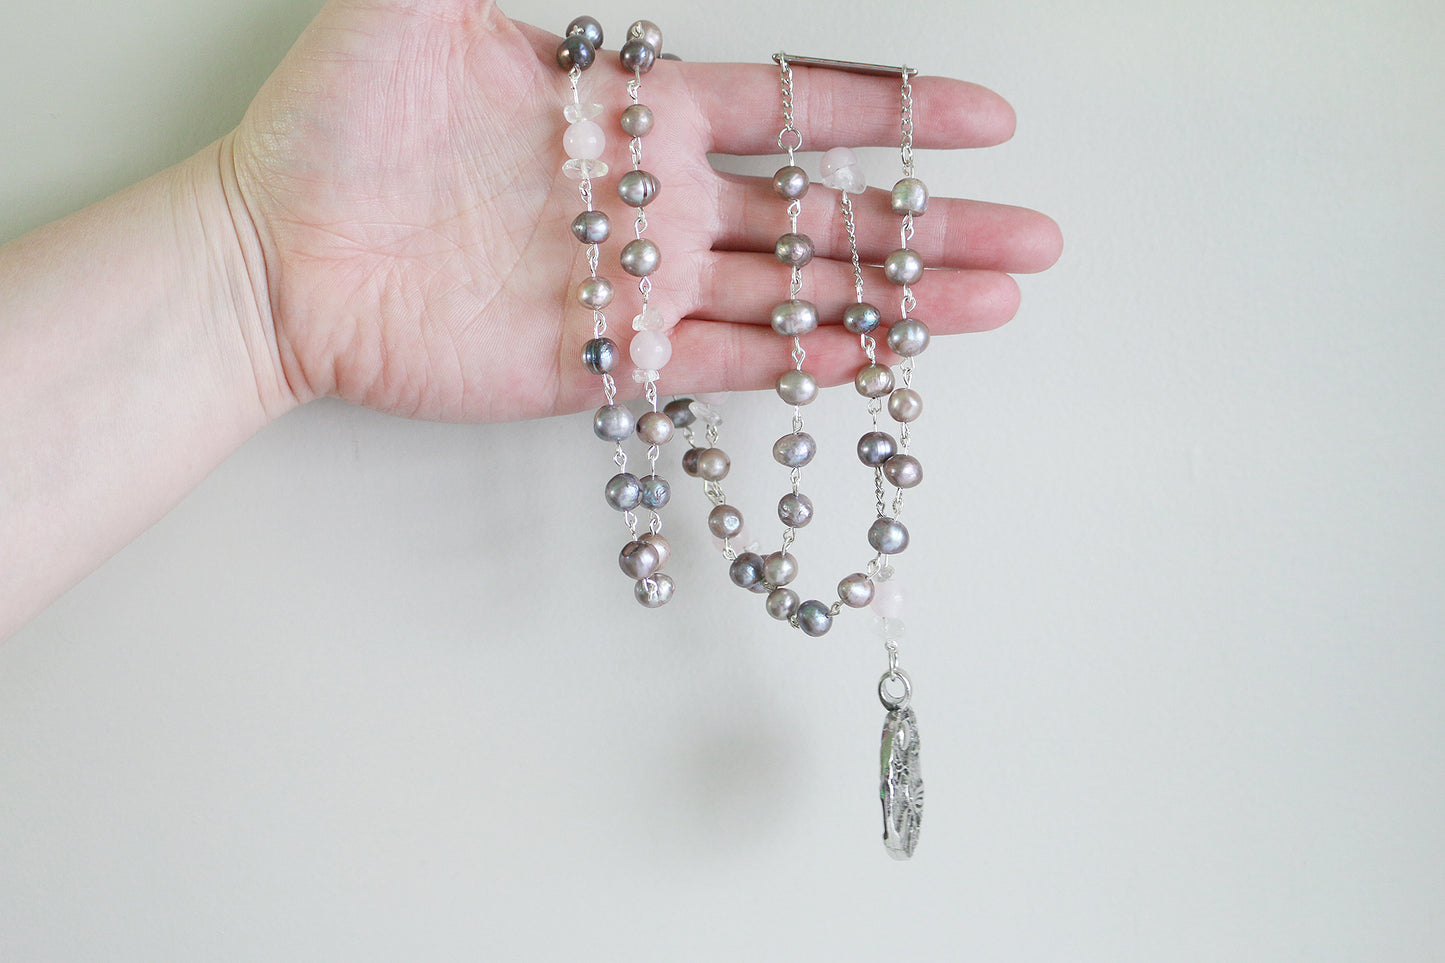 Yggdrasil Prayer/Meditation Beads